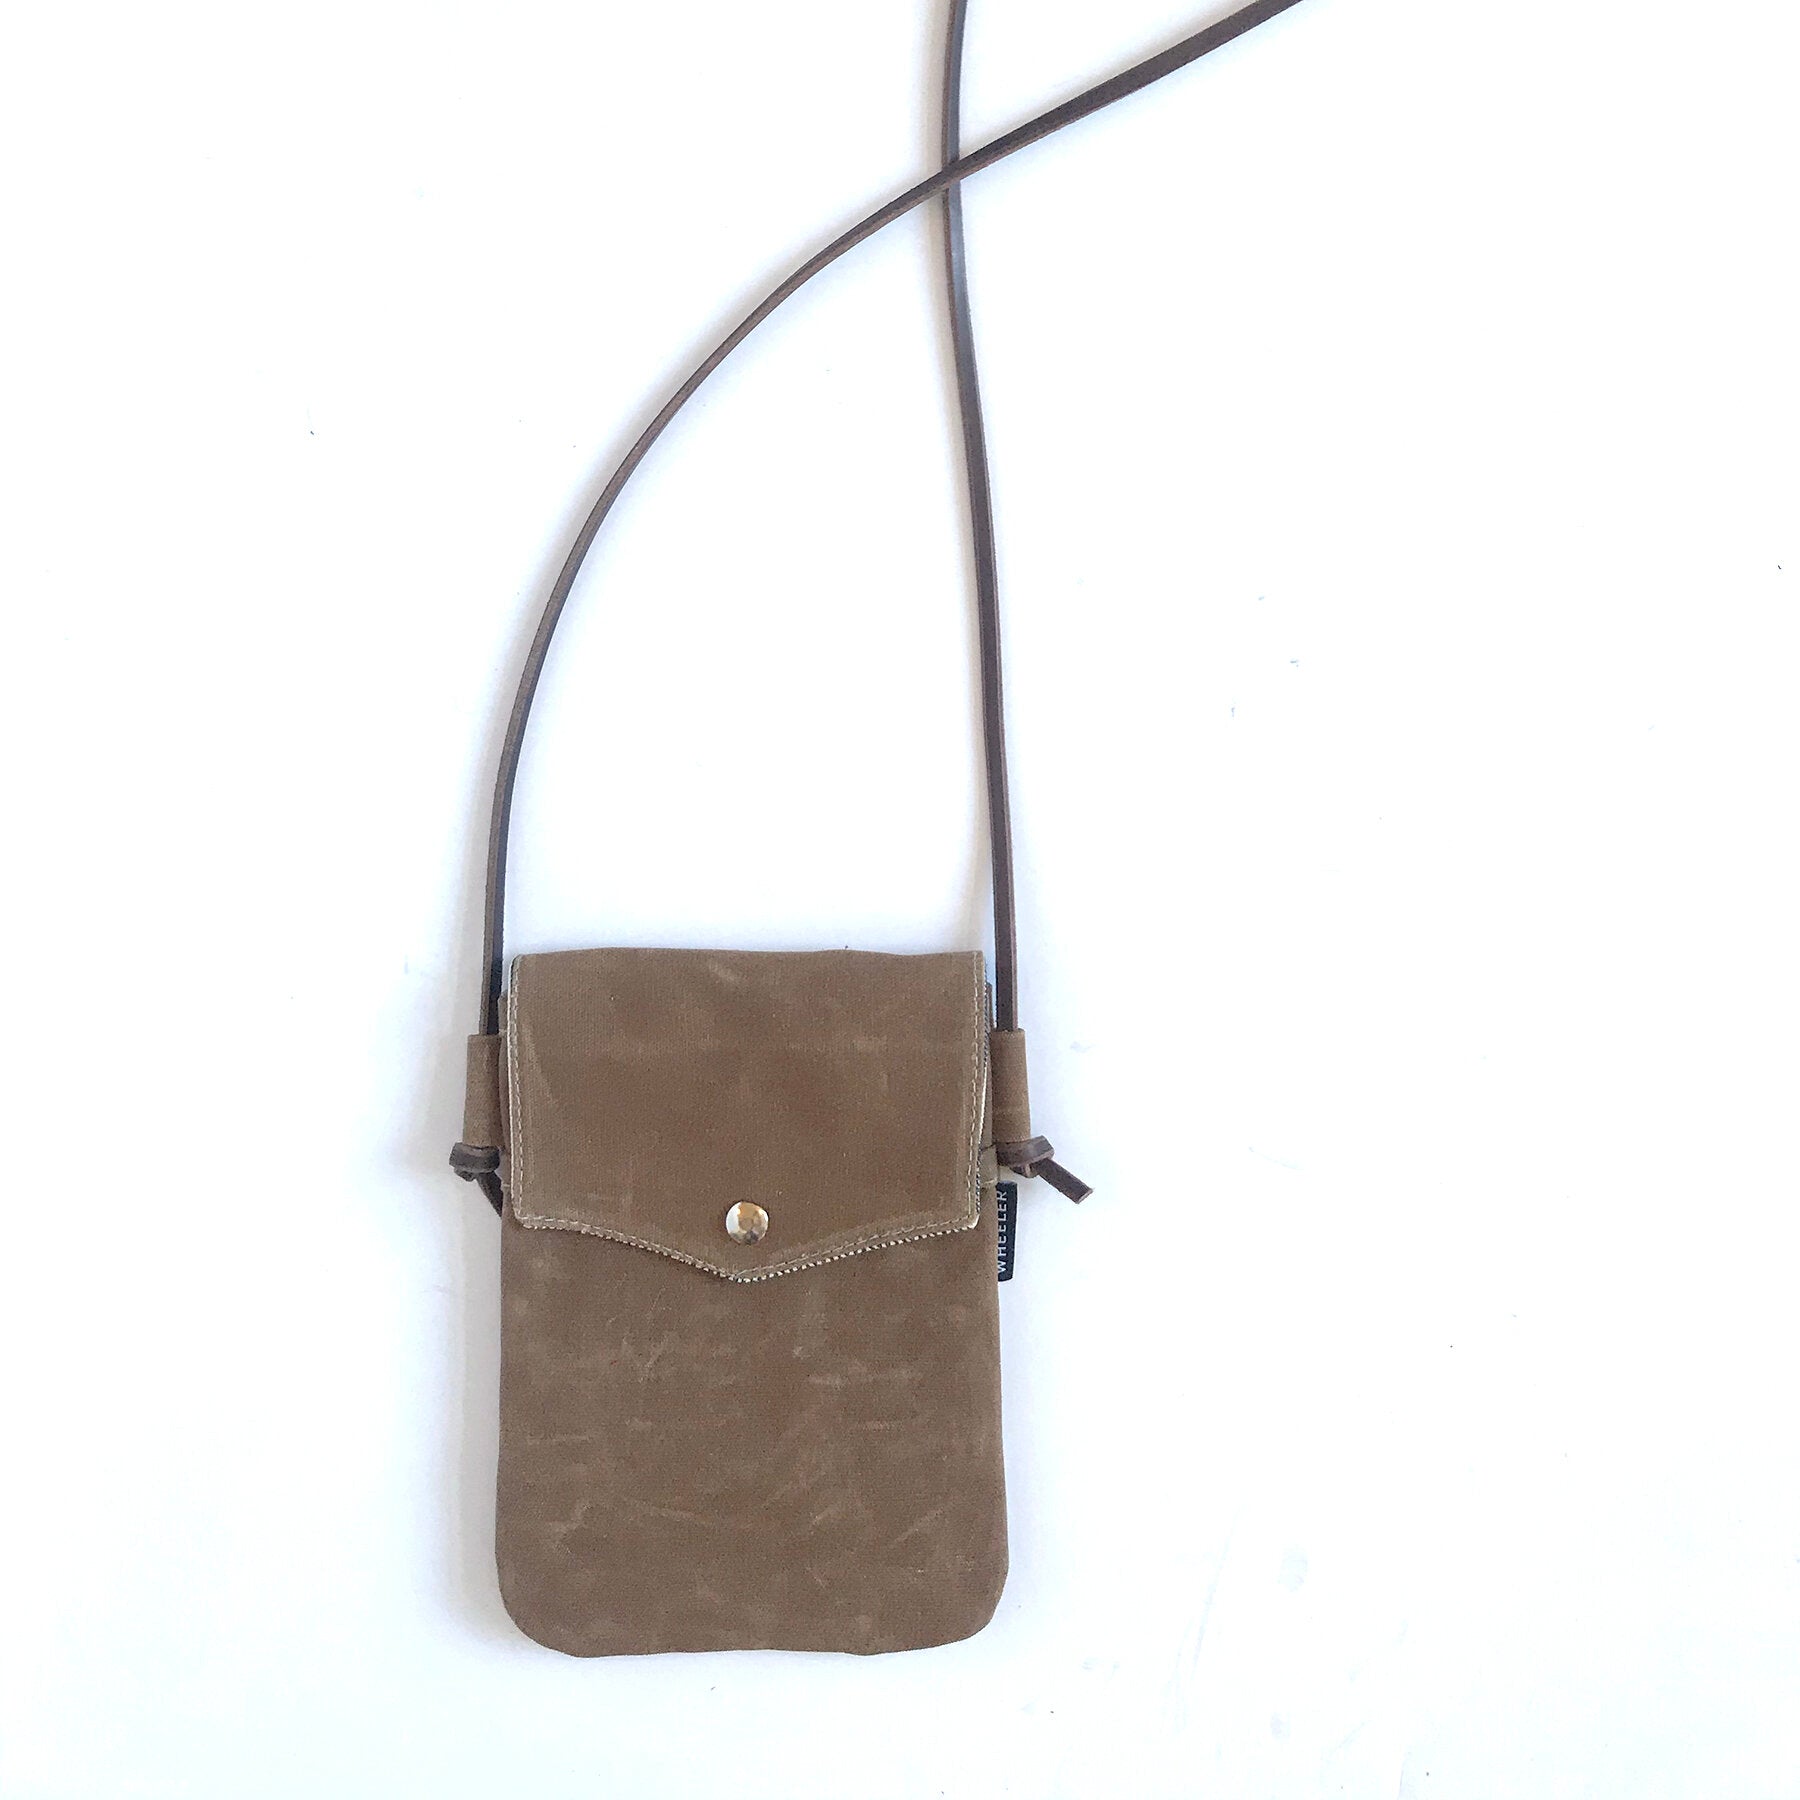 Waxed Canvas Messenger Bag Crossbody Bag Minimalist Bag by -  Sweden